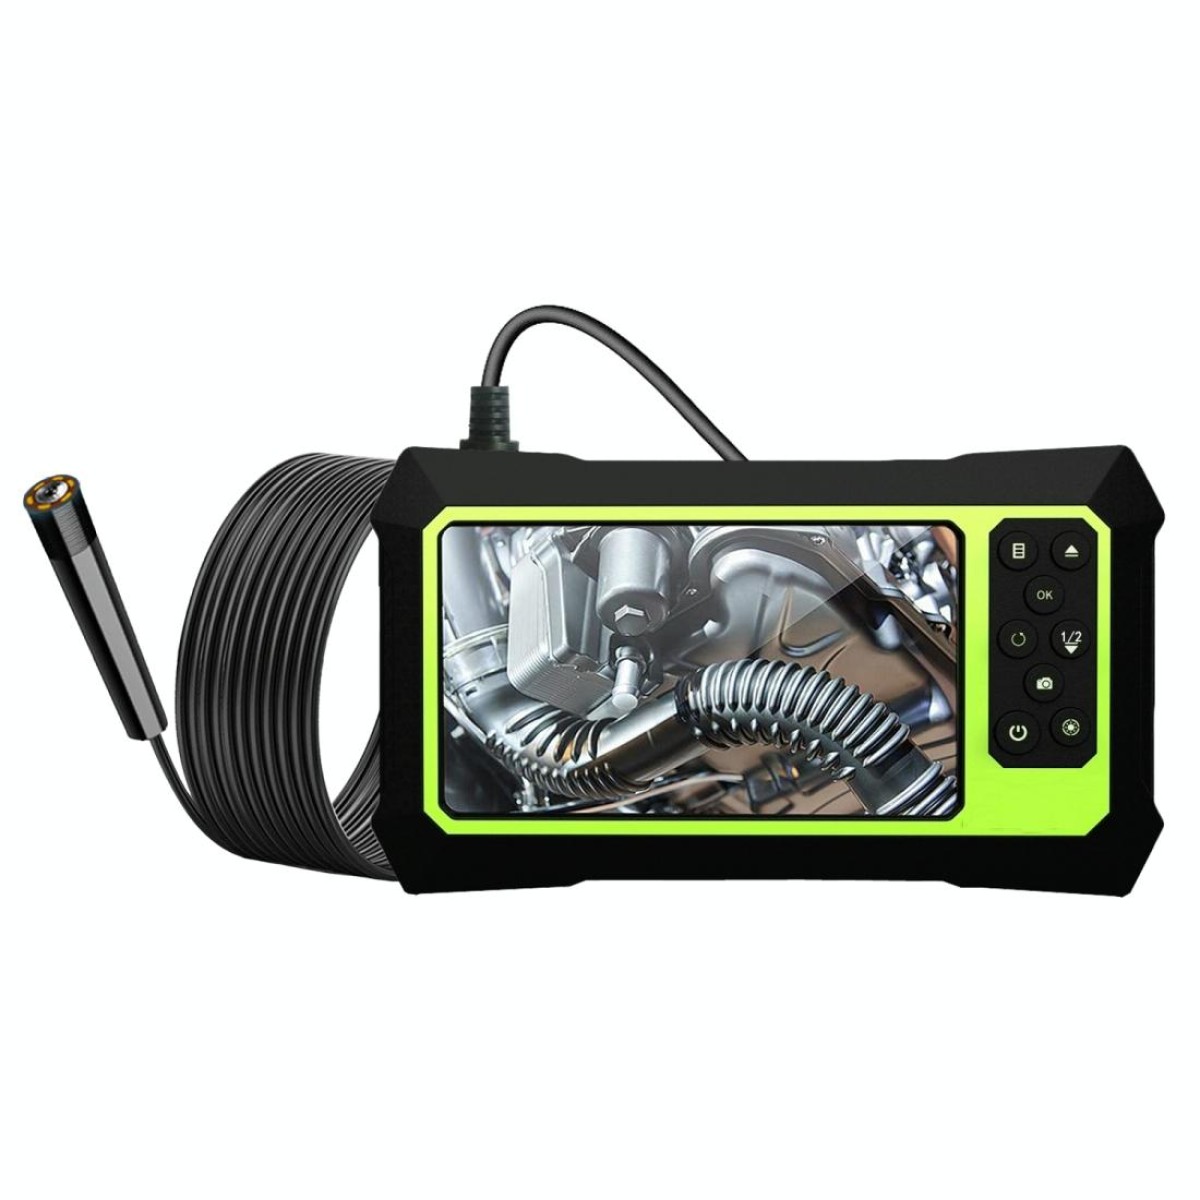 5.5mm 1080P IP68 Waterproof 4.3 inch Screen Single Camera Digital Endoscope, Line Length:7m